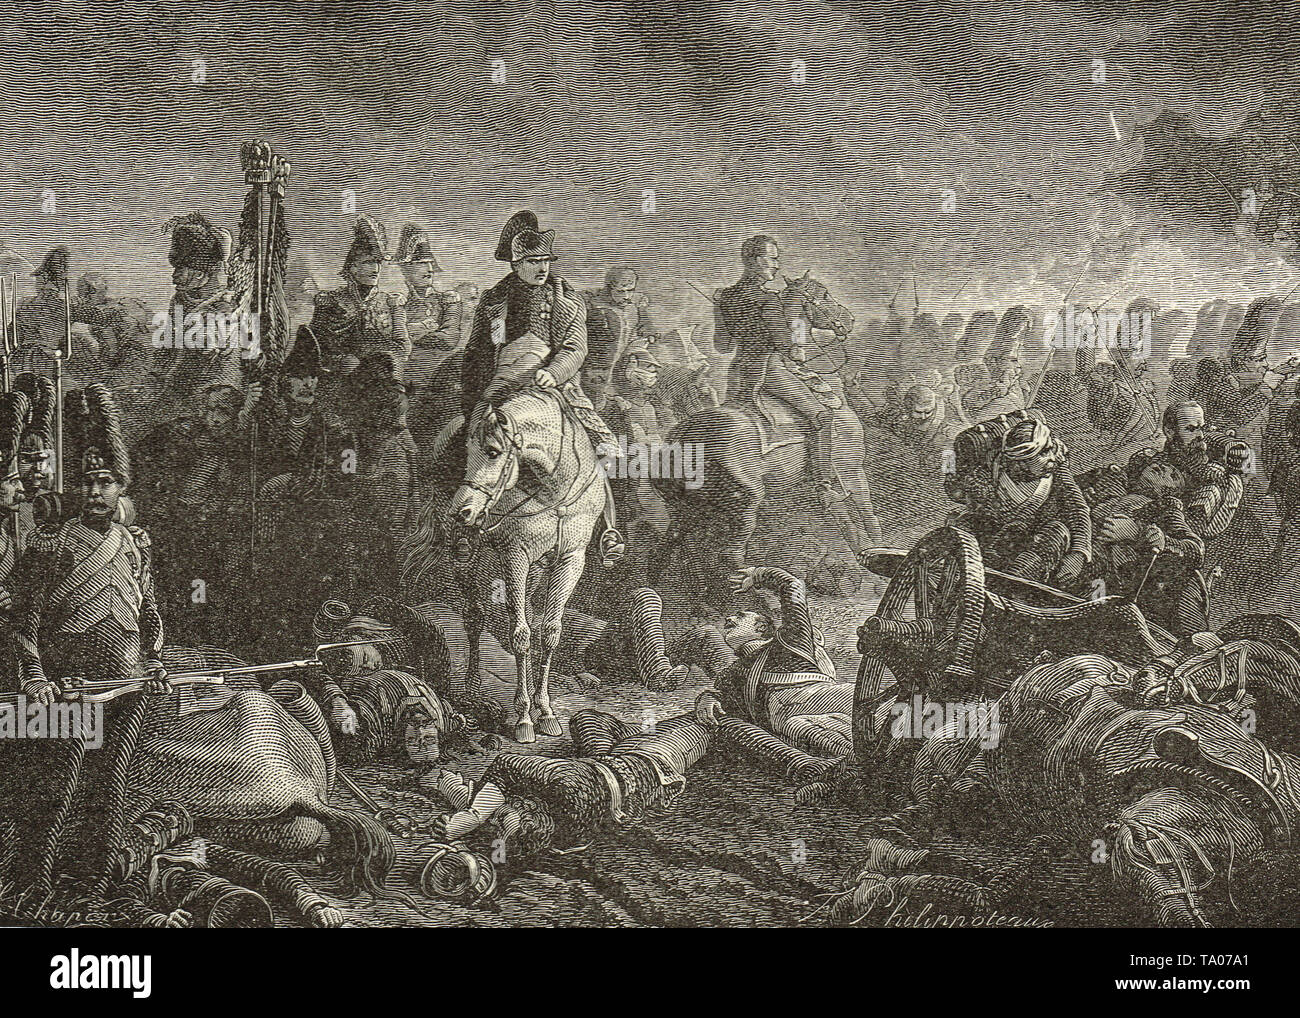 Napoleon at the Battle of Waterloo,18 June 1815 Stock Photo